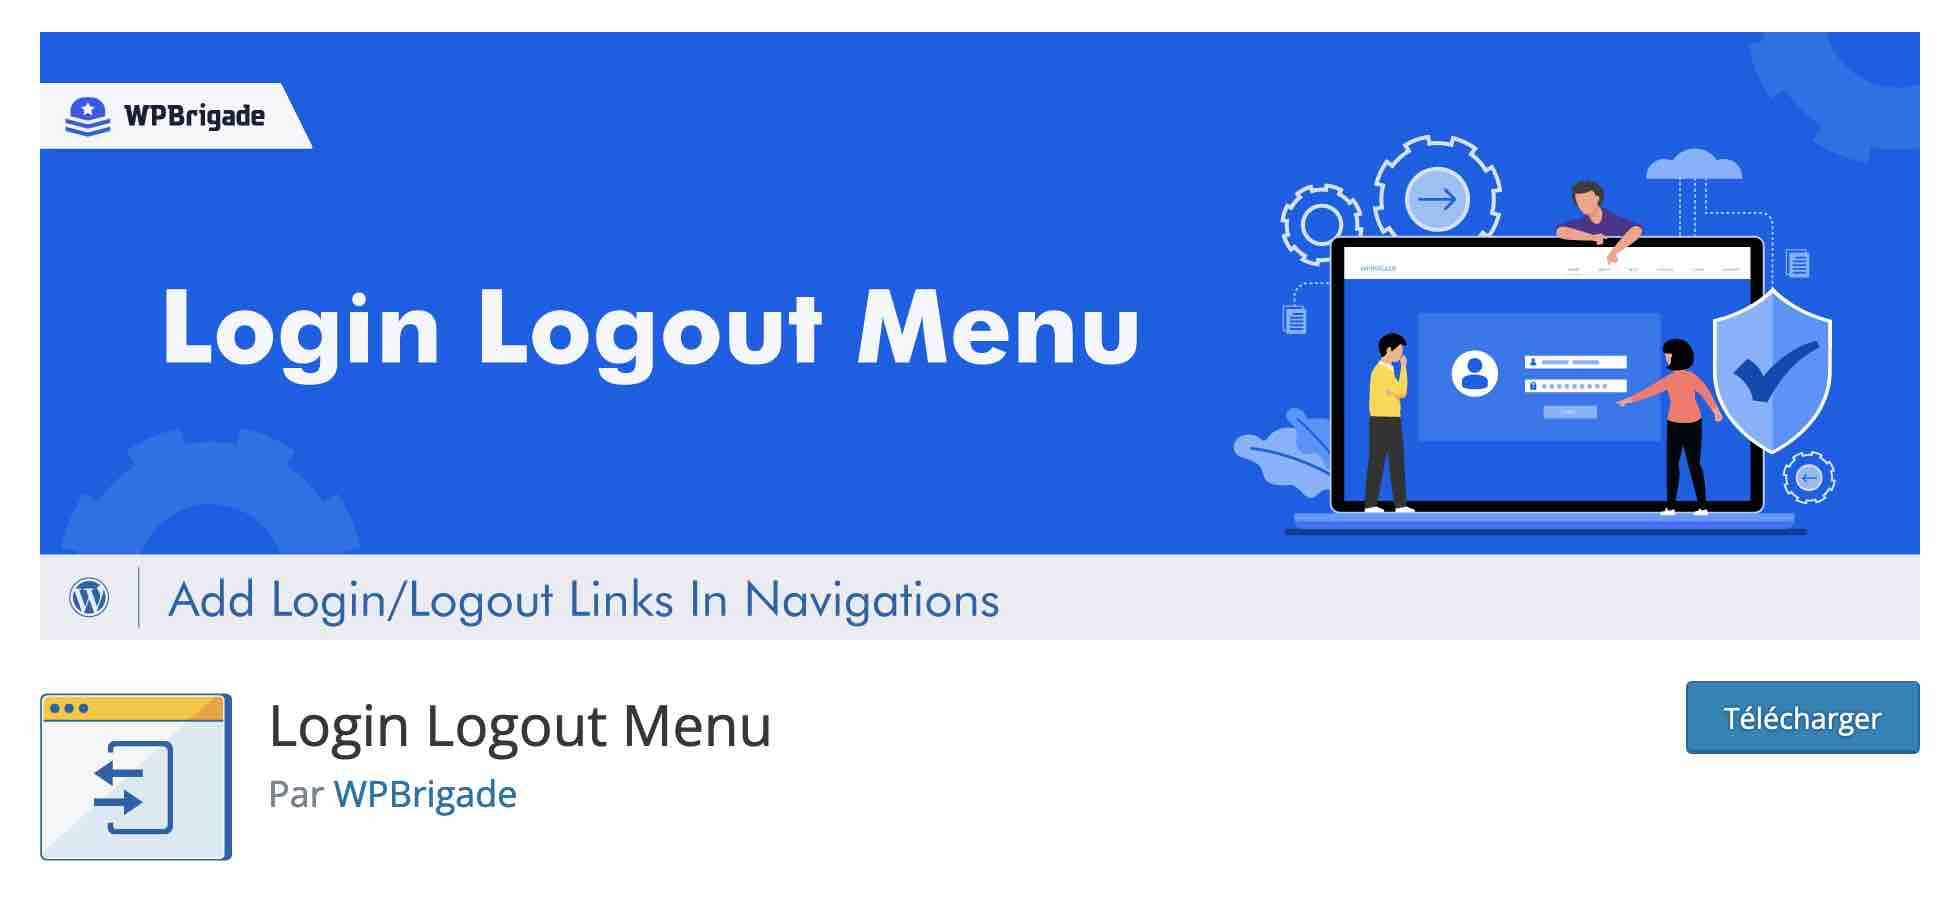 Login Logout Menu adds buttons to login to your WordPress site.